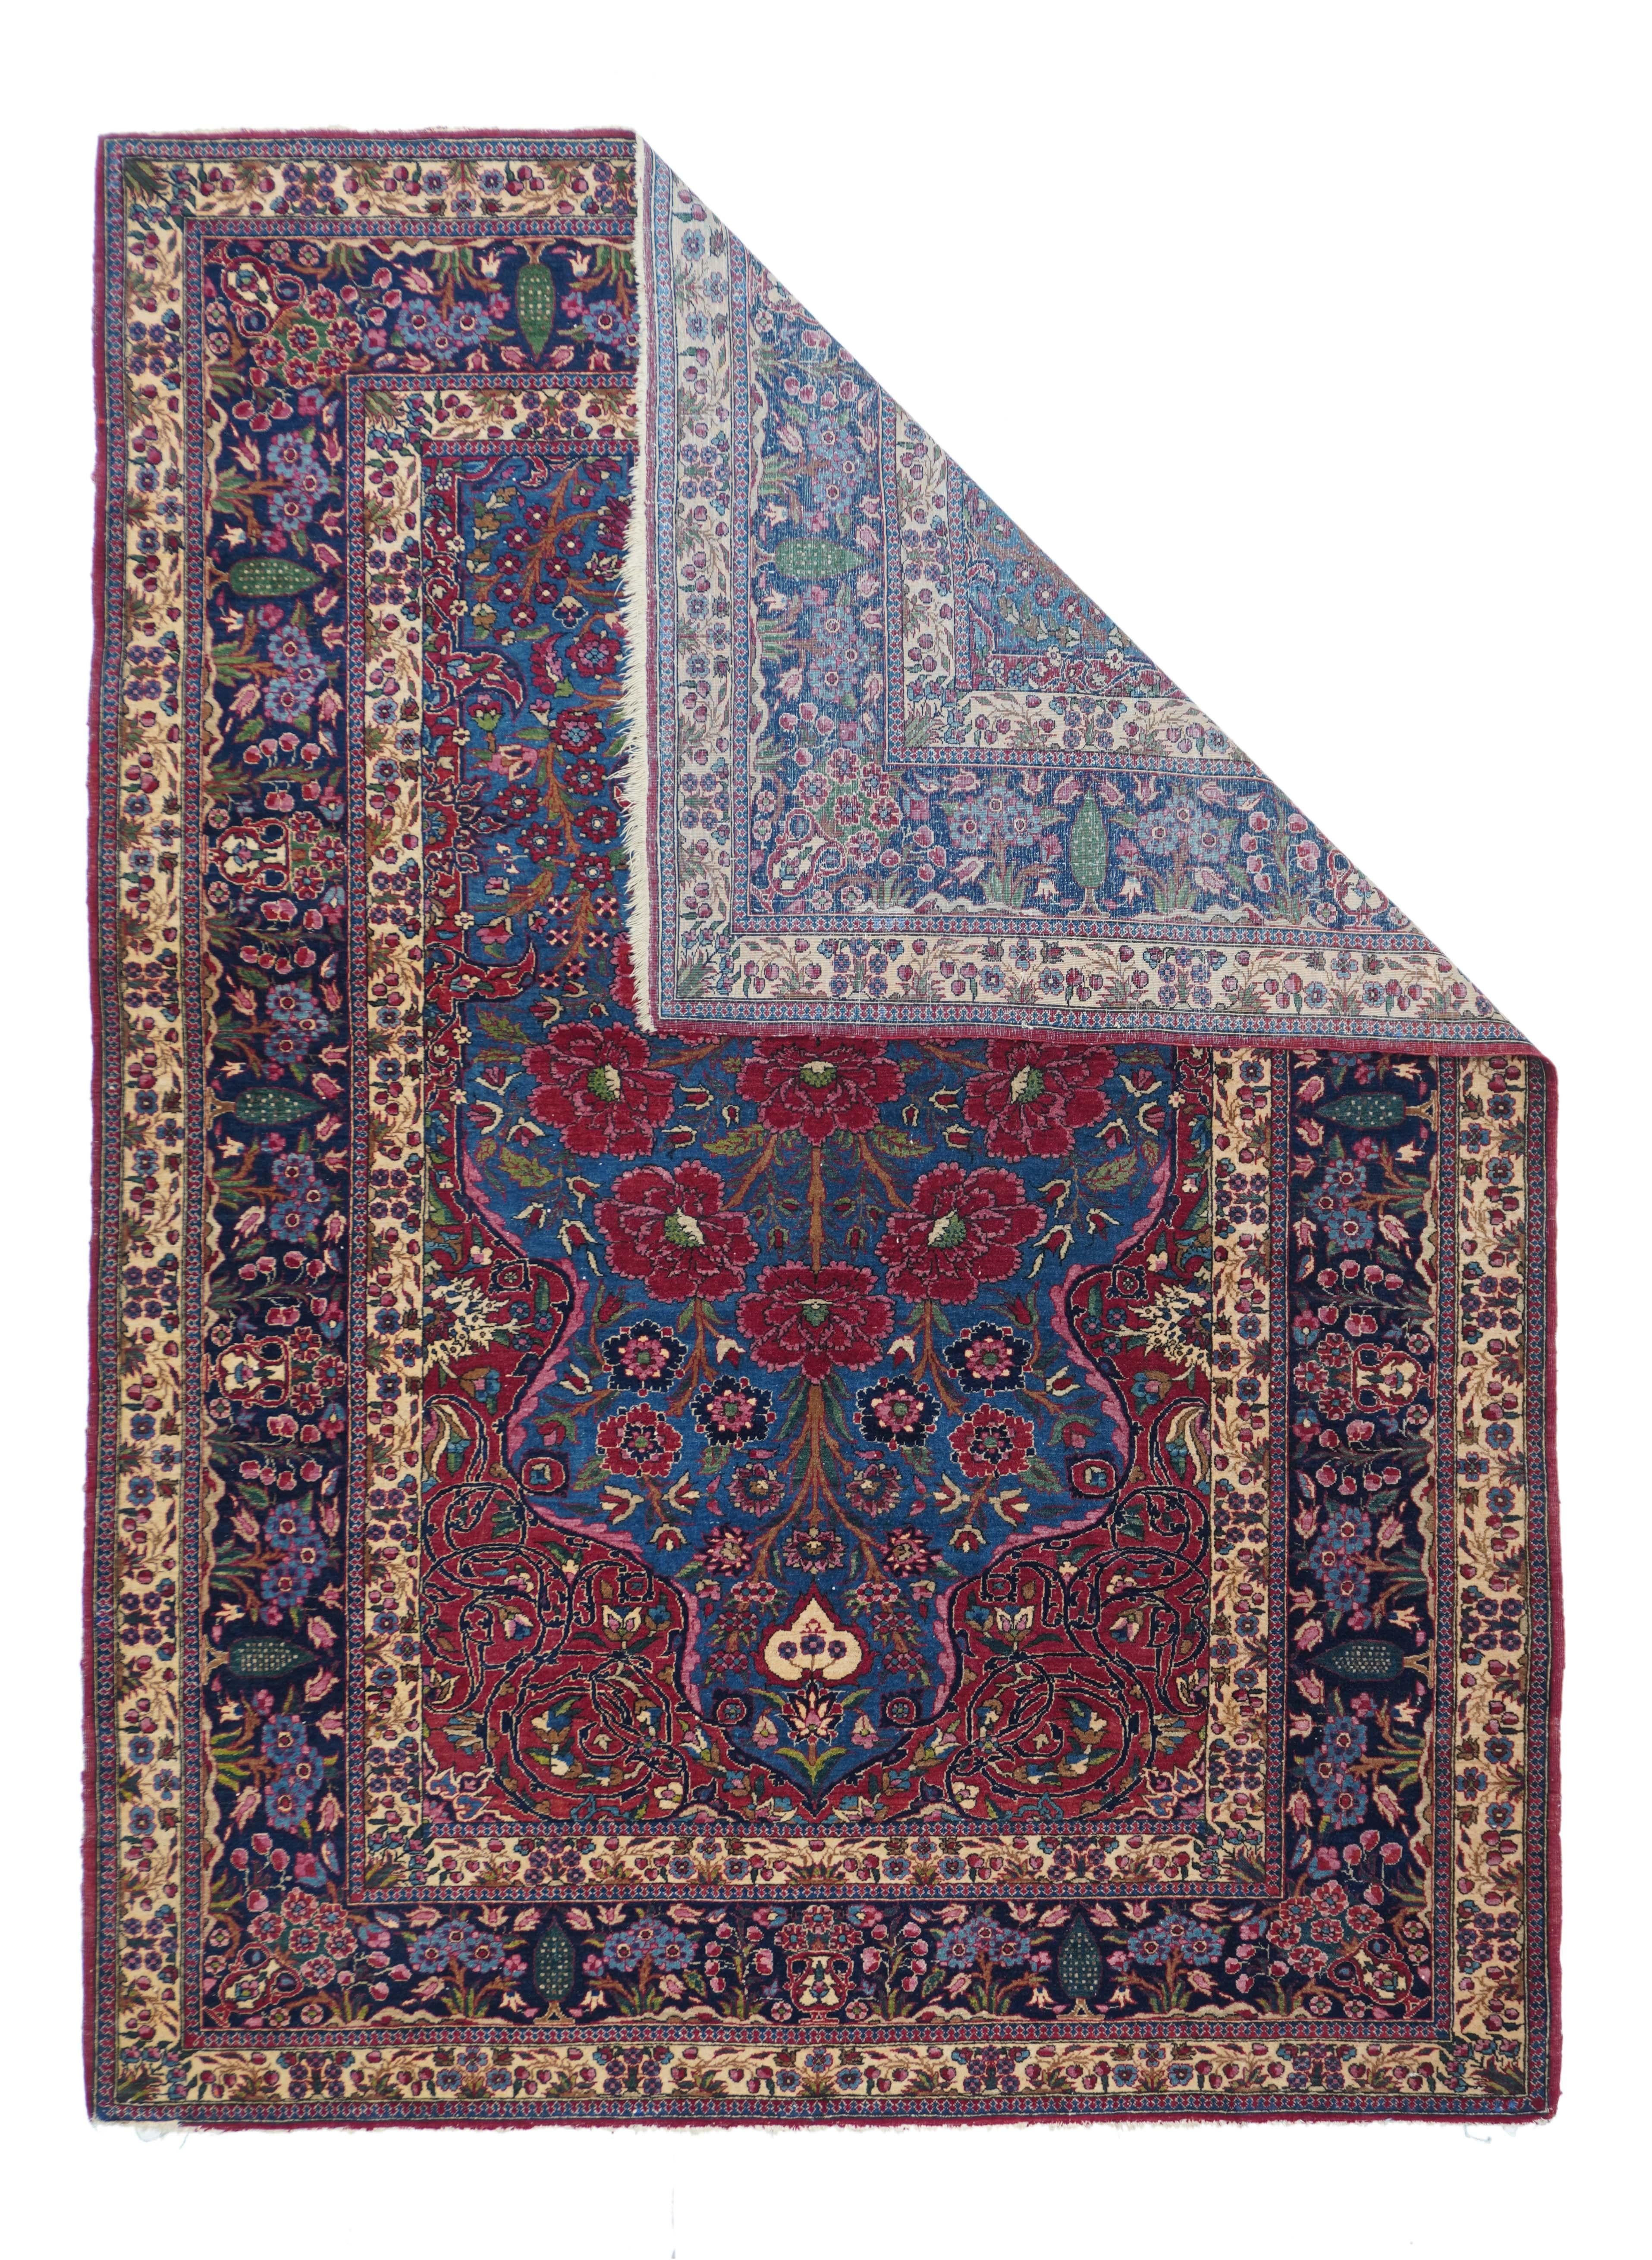 Antique Semnan rug. Measures: 4.9'' x 6.5''.